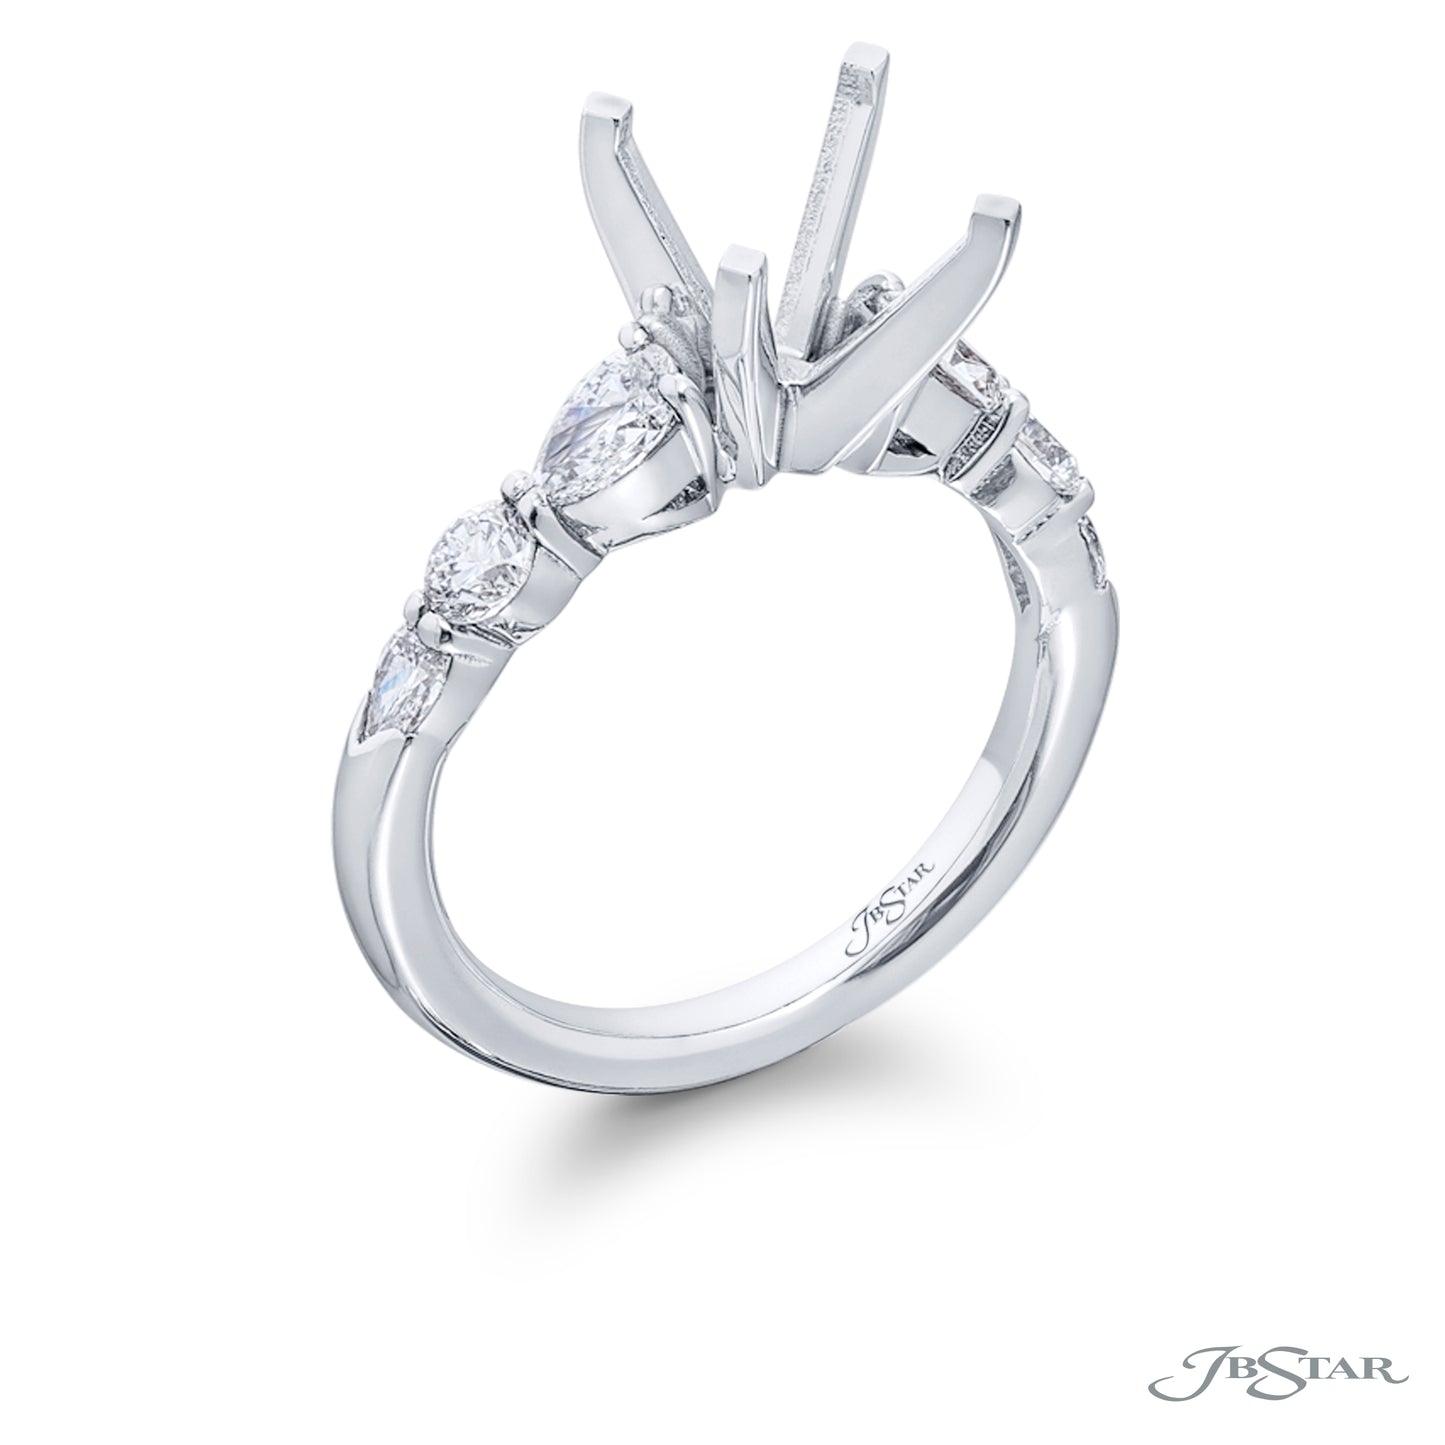 JB Star Platinum Diamond Semi-Mount Engagement Ring